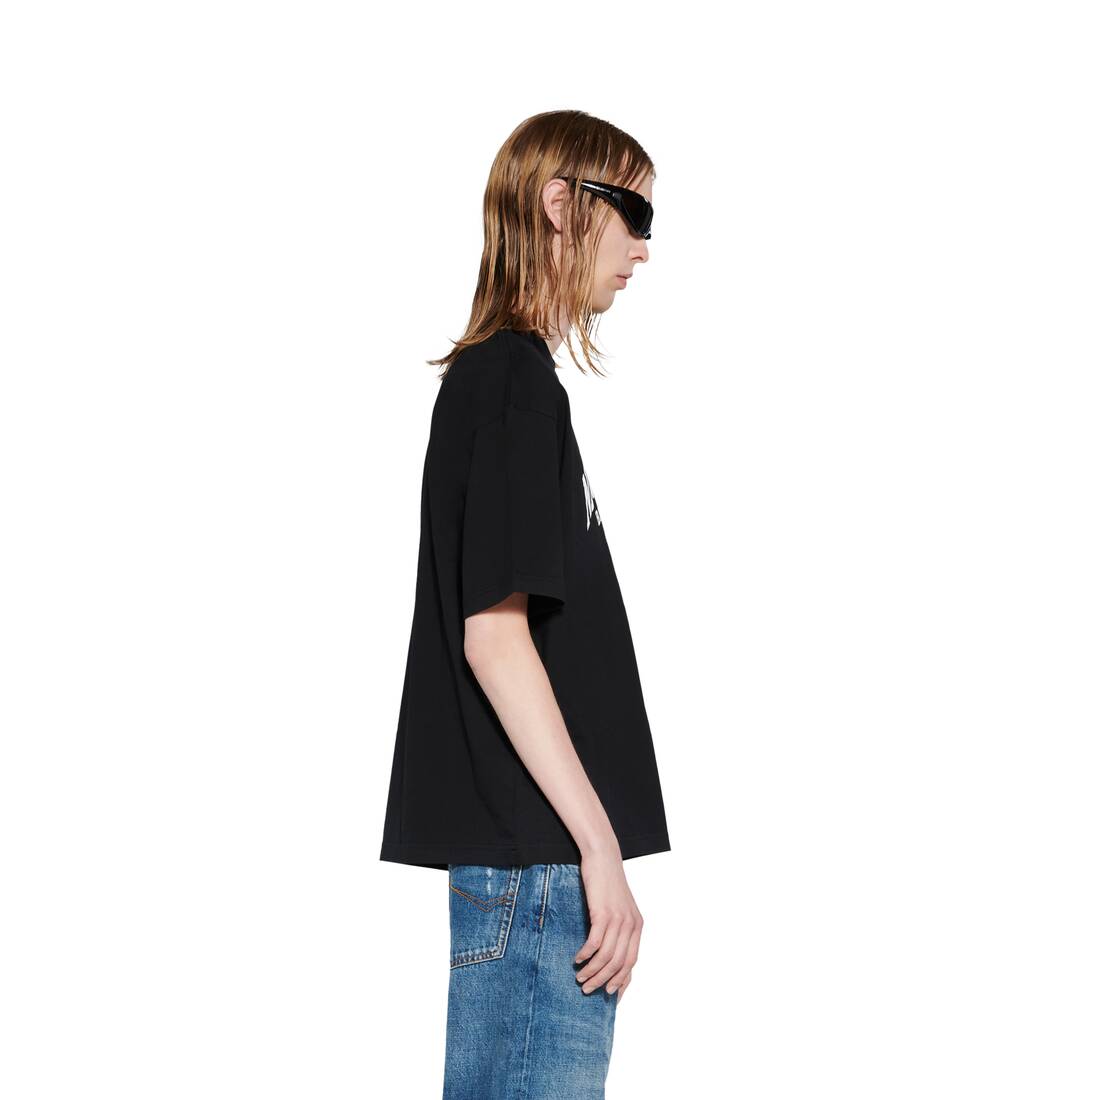 Men's Cities New York T-shirt Medium Fit in Black